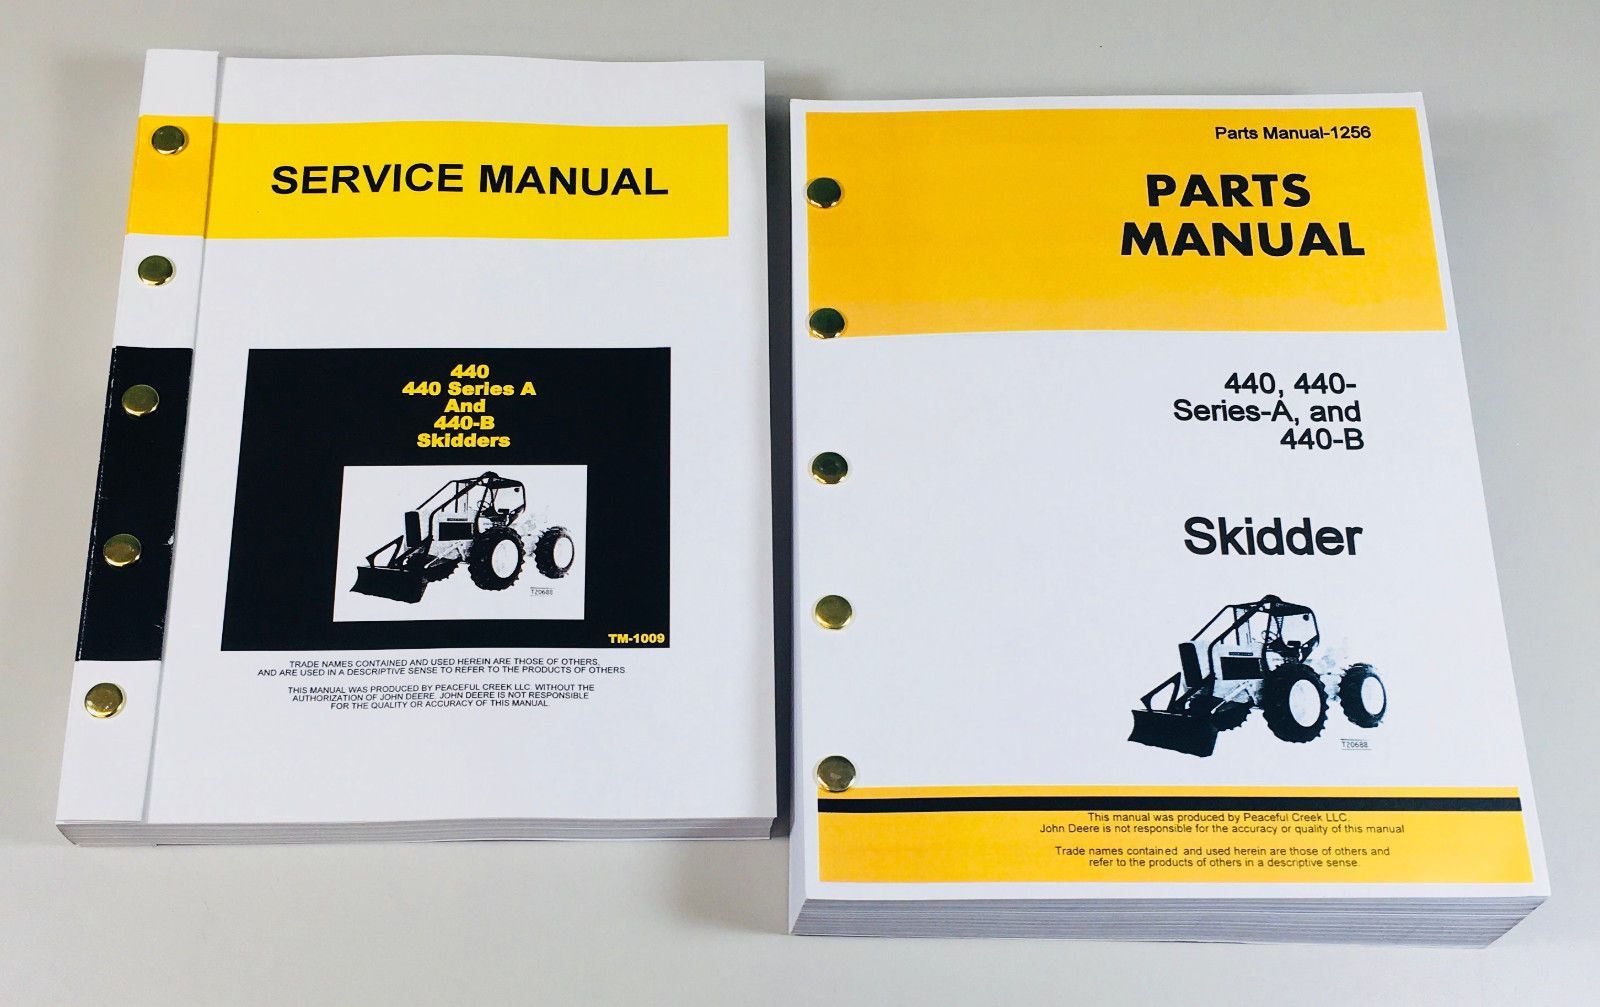 Read Your Equipment Manuals